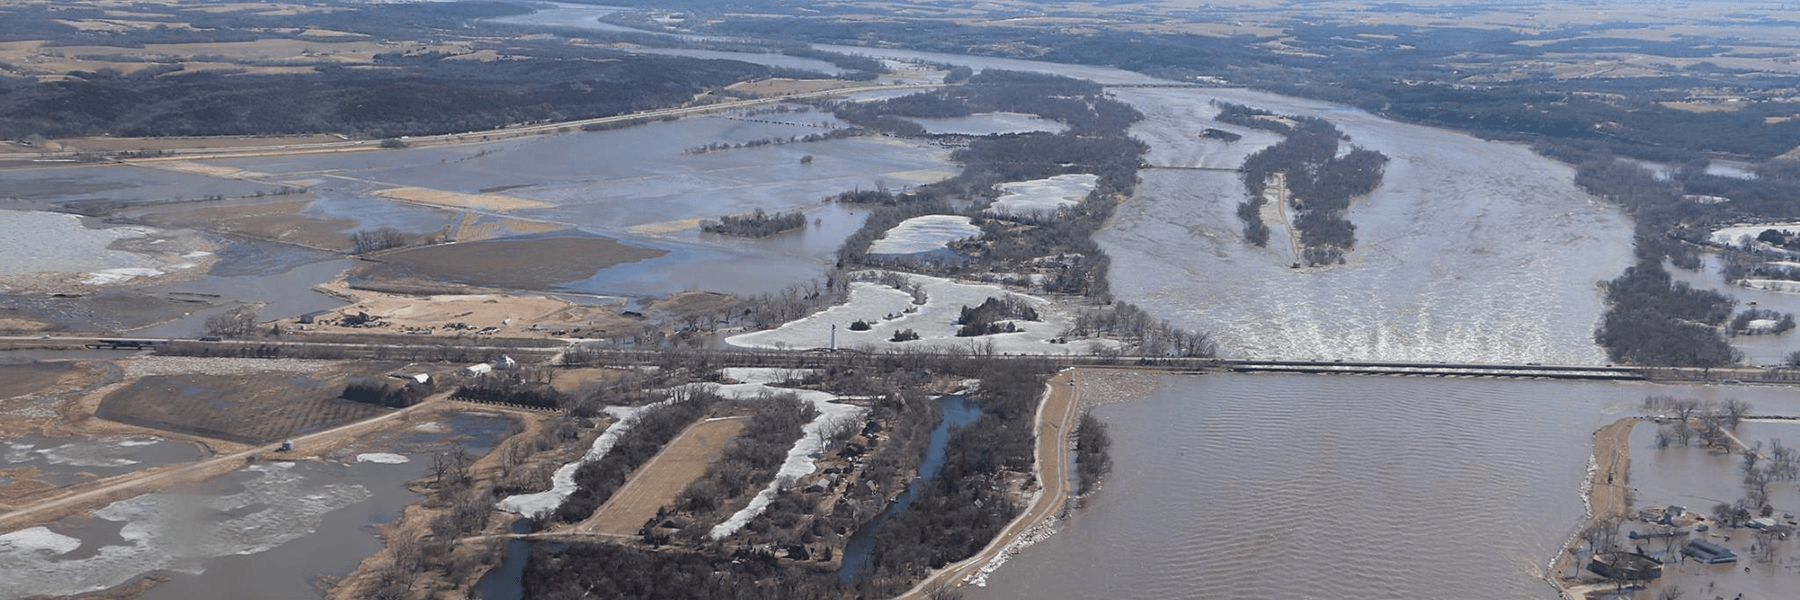 Flooding in Nebraska, March 2019